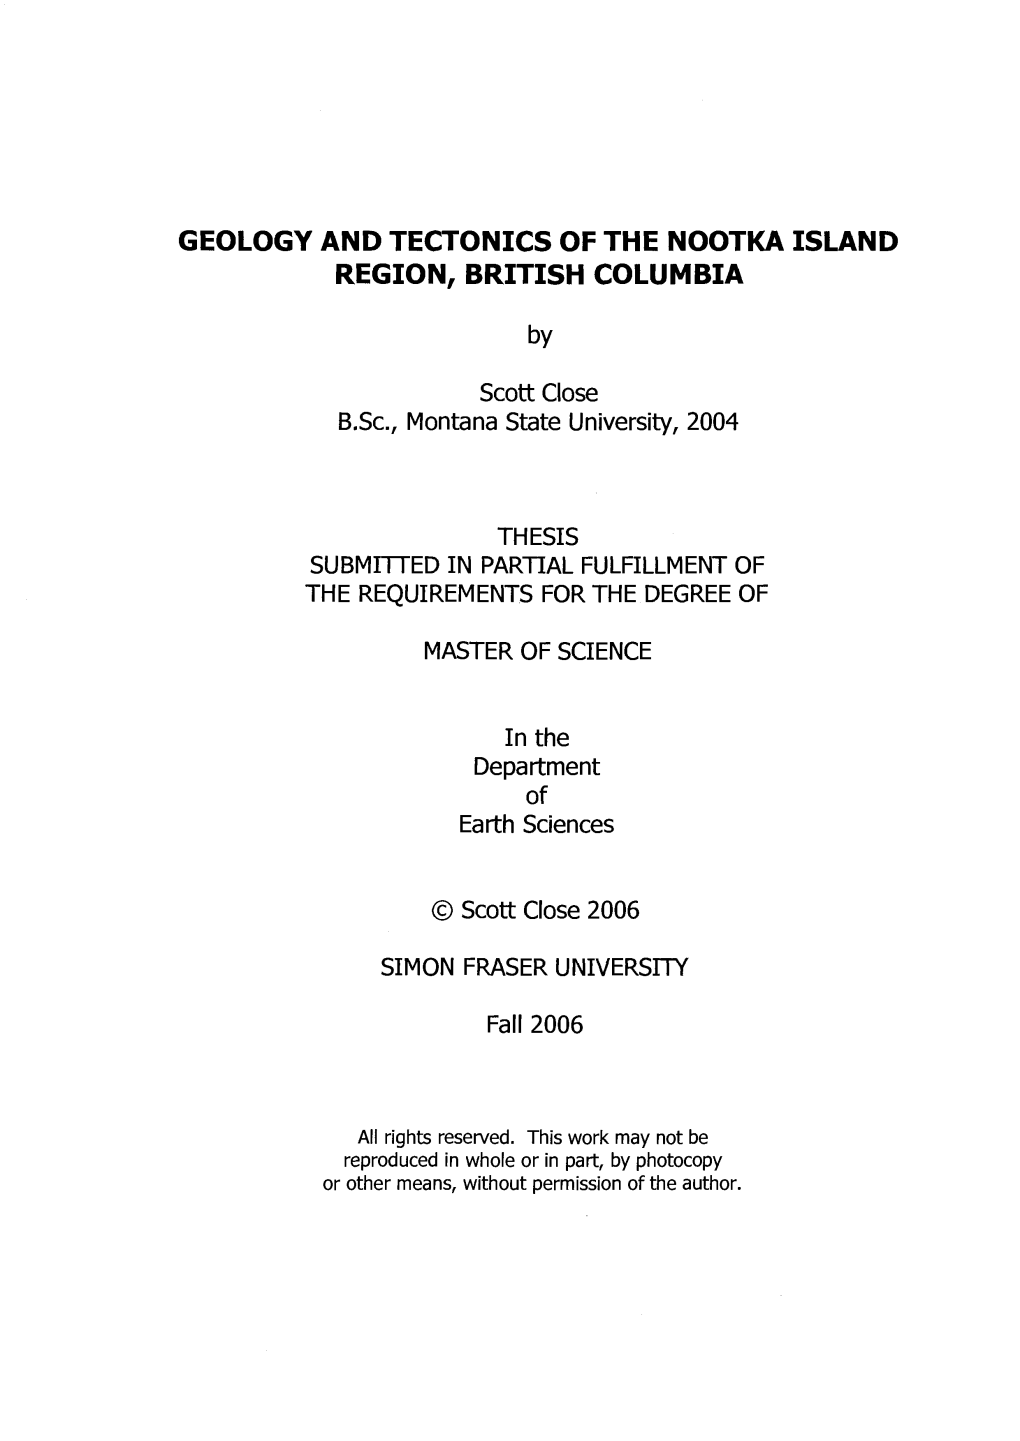 Geology and Tectonics of the Nootka Island Region, British Columbia